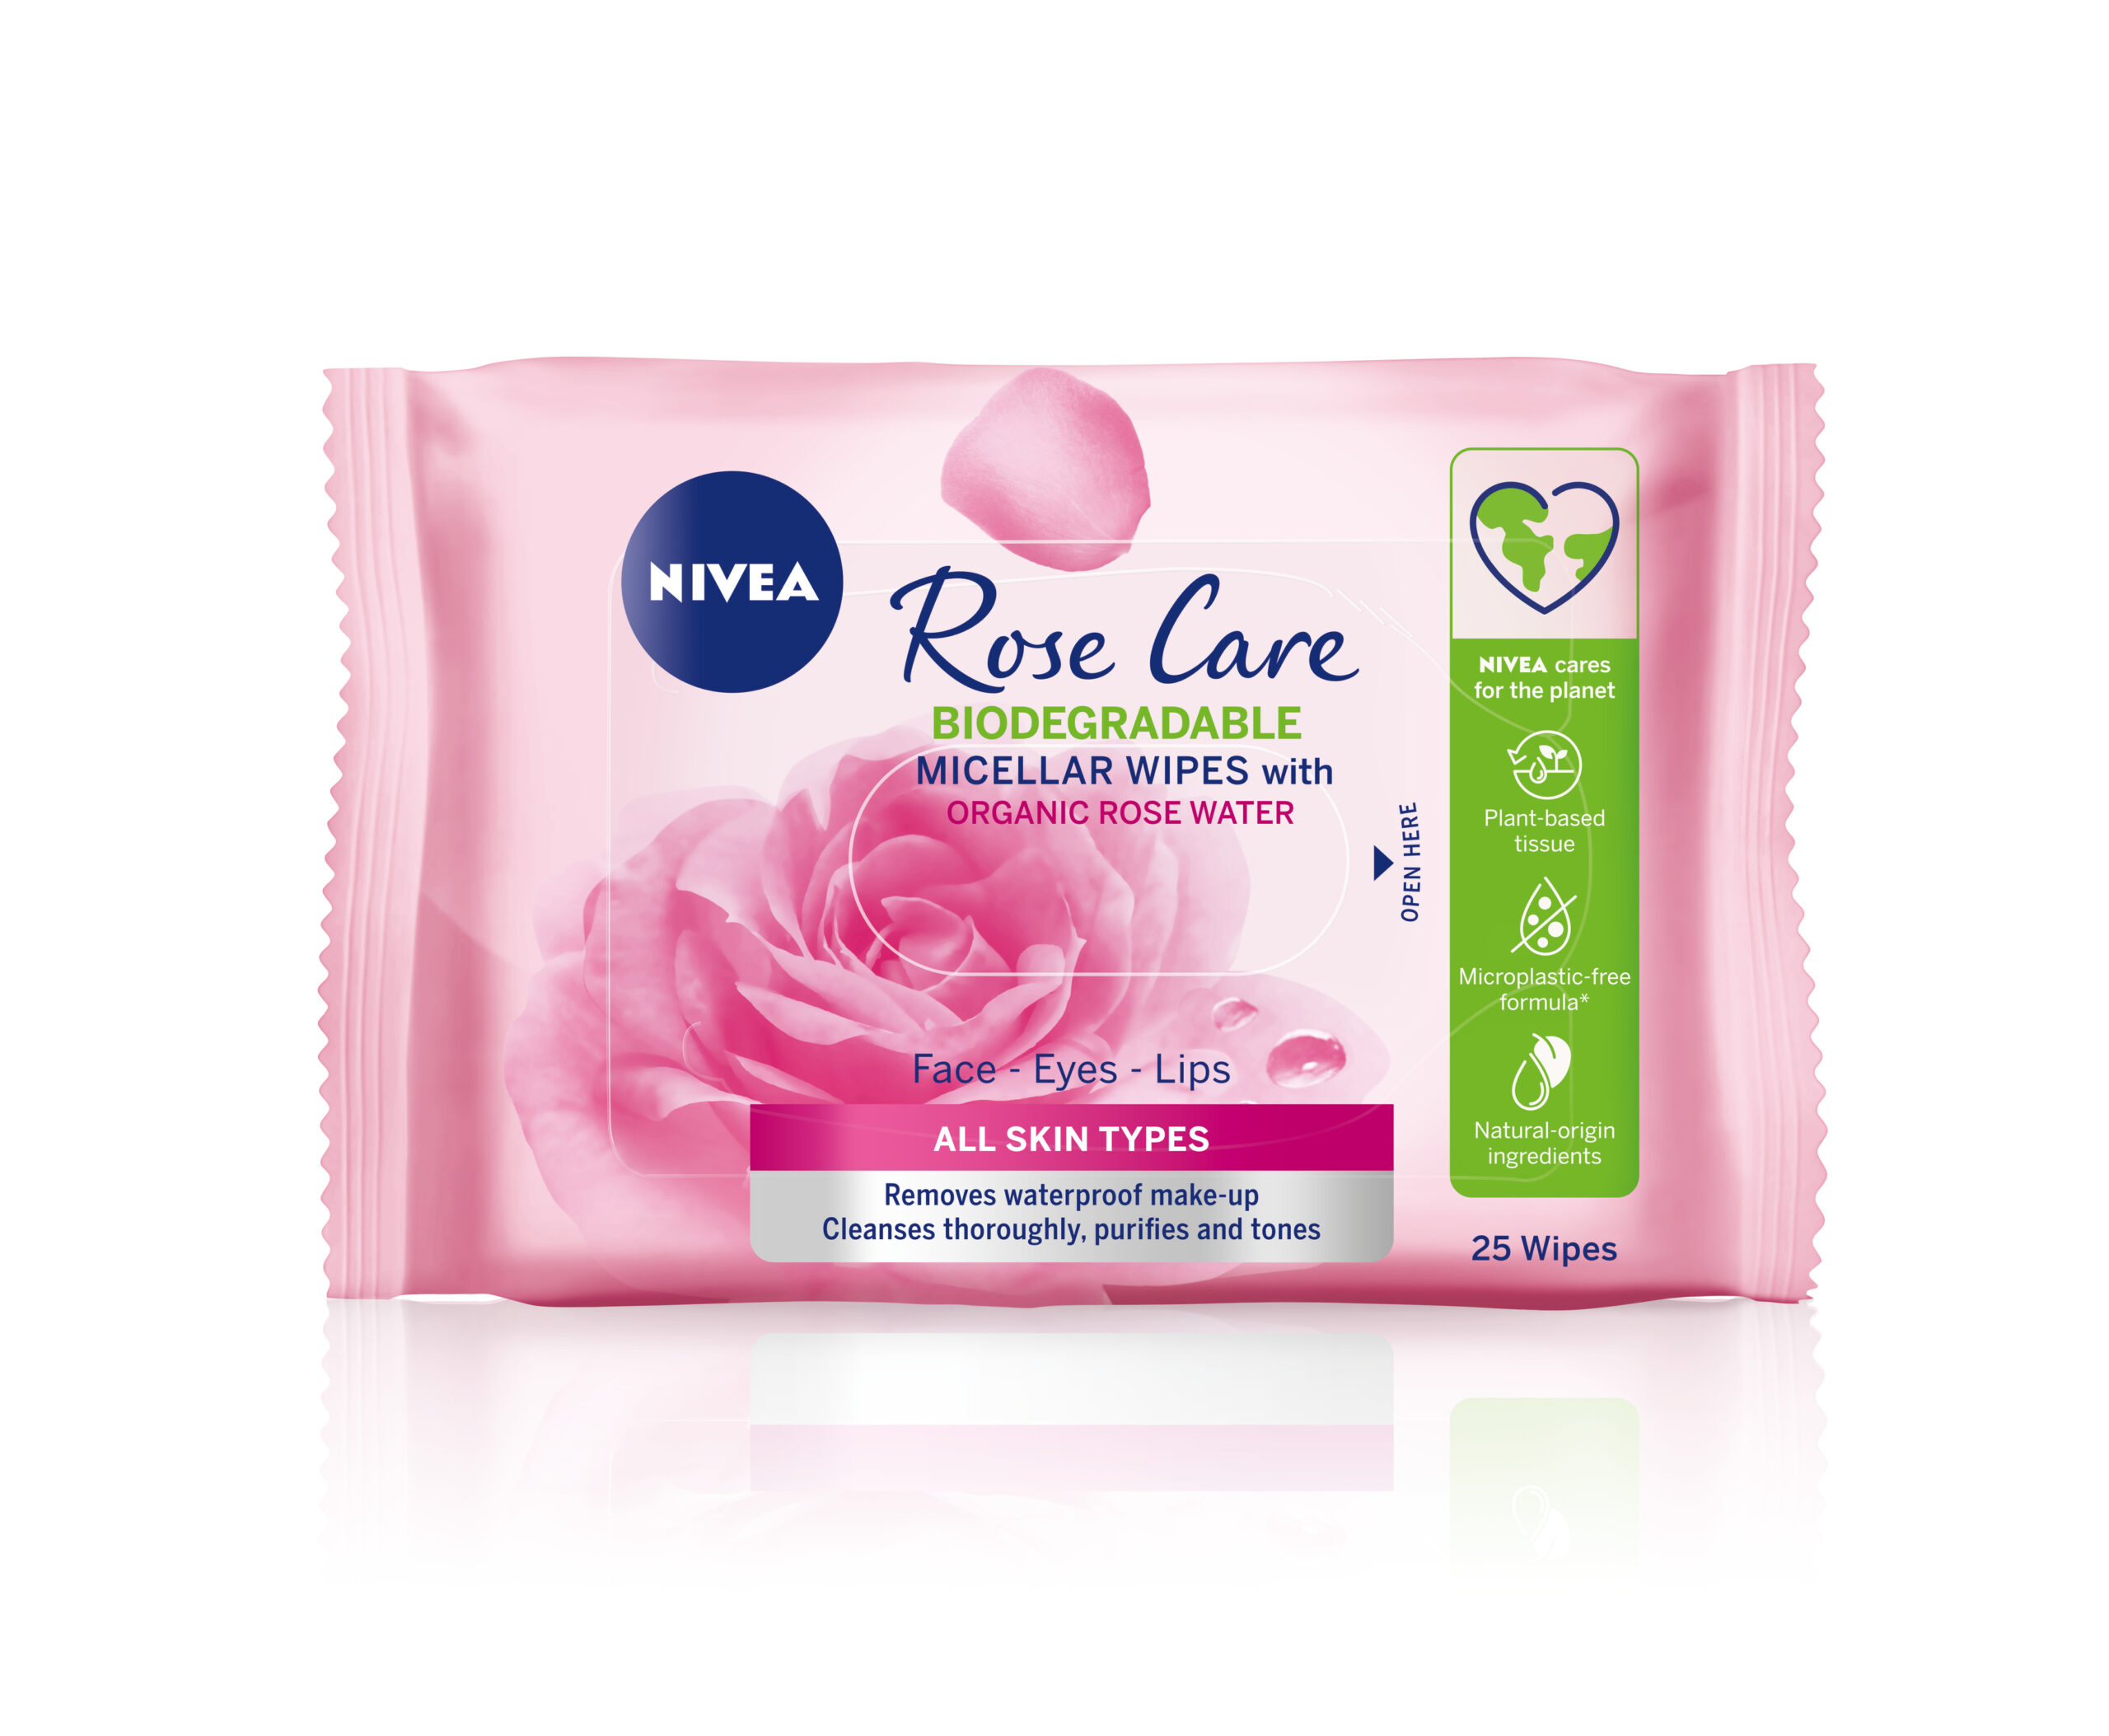 Trenutno osveženje, prirodni sjaj i negovana koža uz NIVEA Rose Touch proizvode sa organskom ružinom vodicom